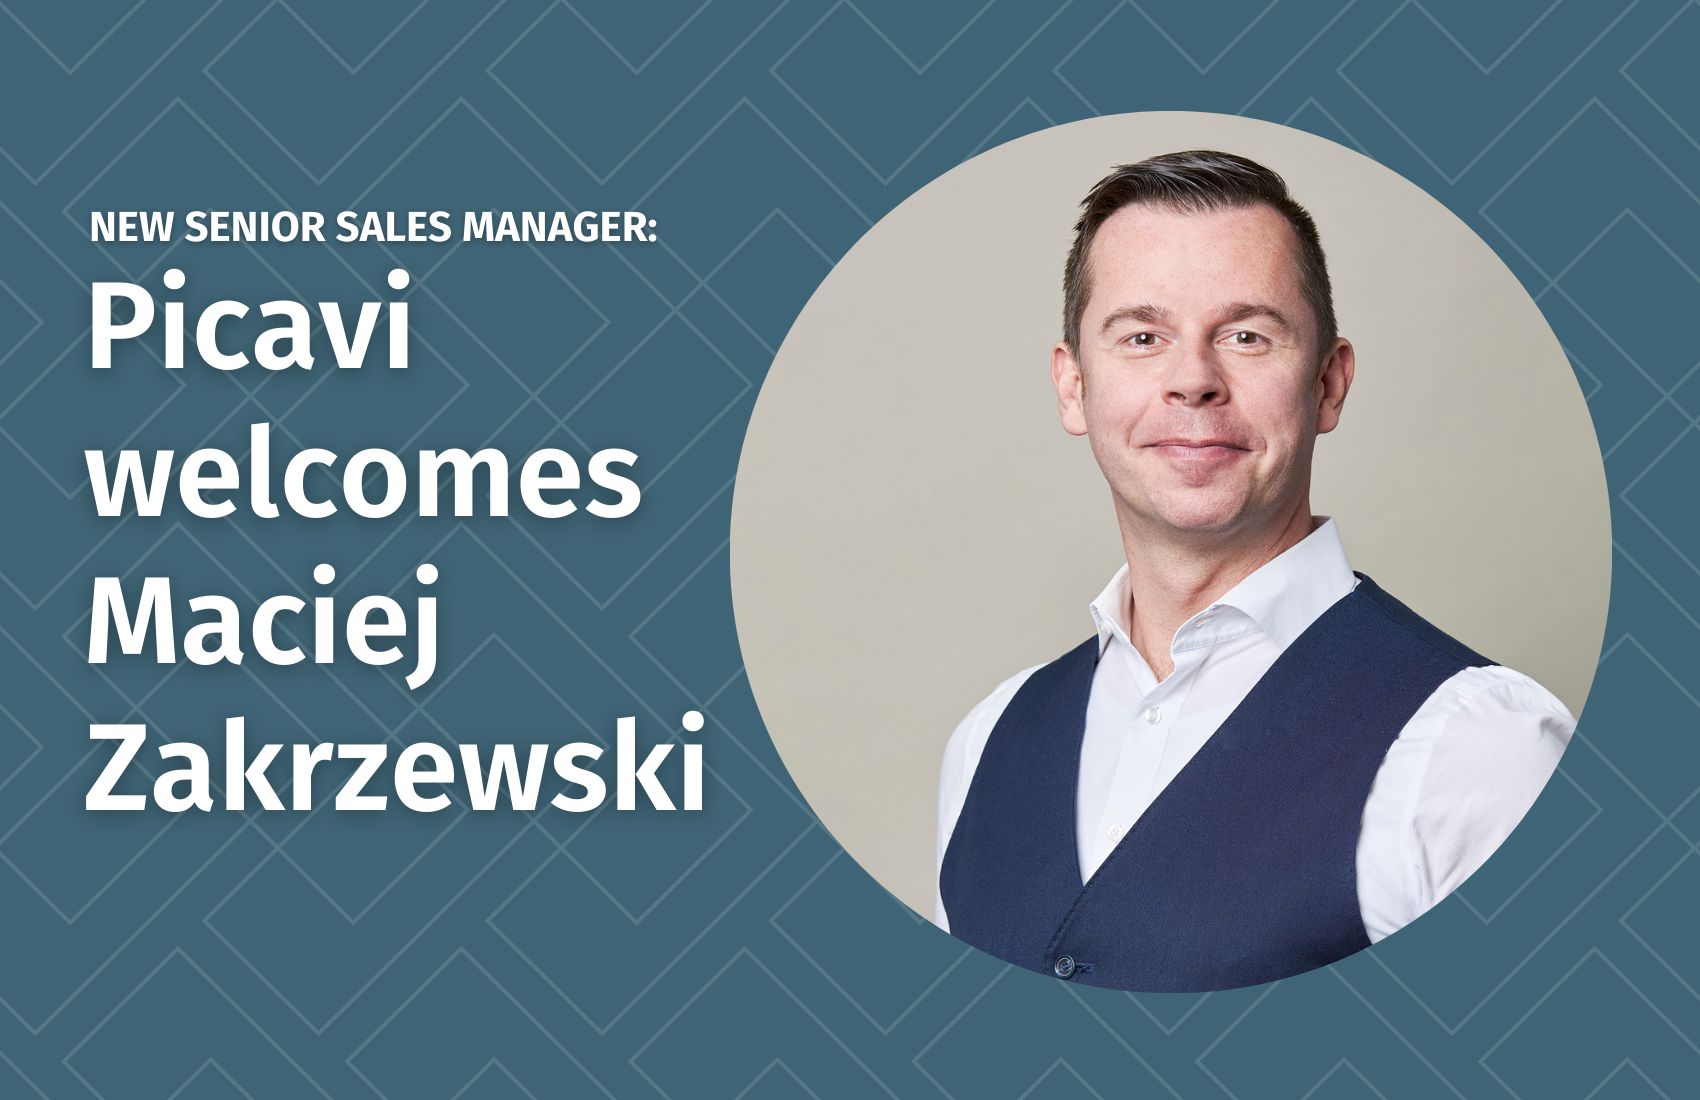 Pick-by-vision expert continues to grow Maciej Zakrzewski joins Picavi